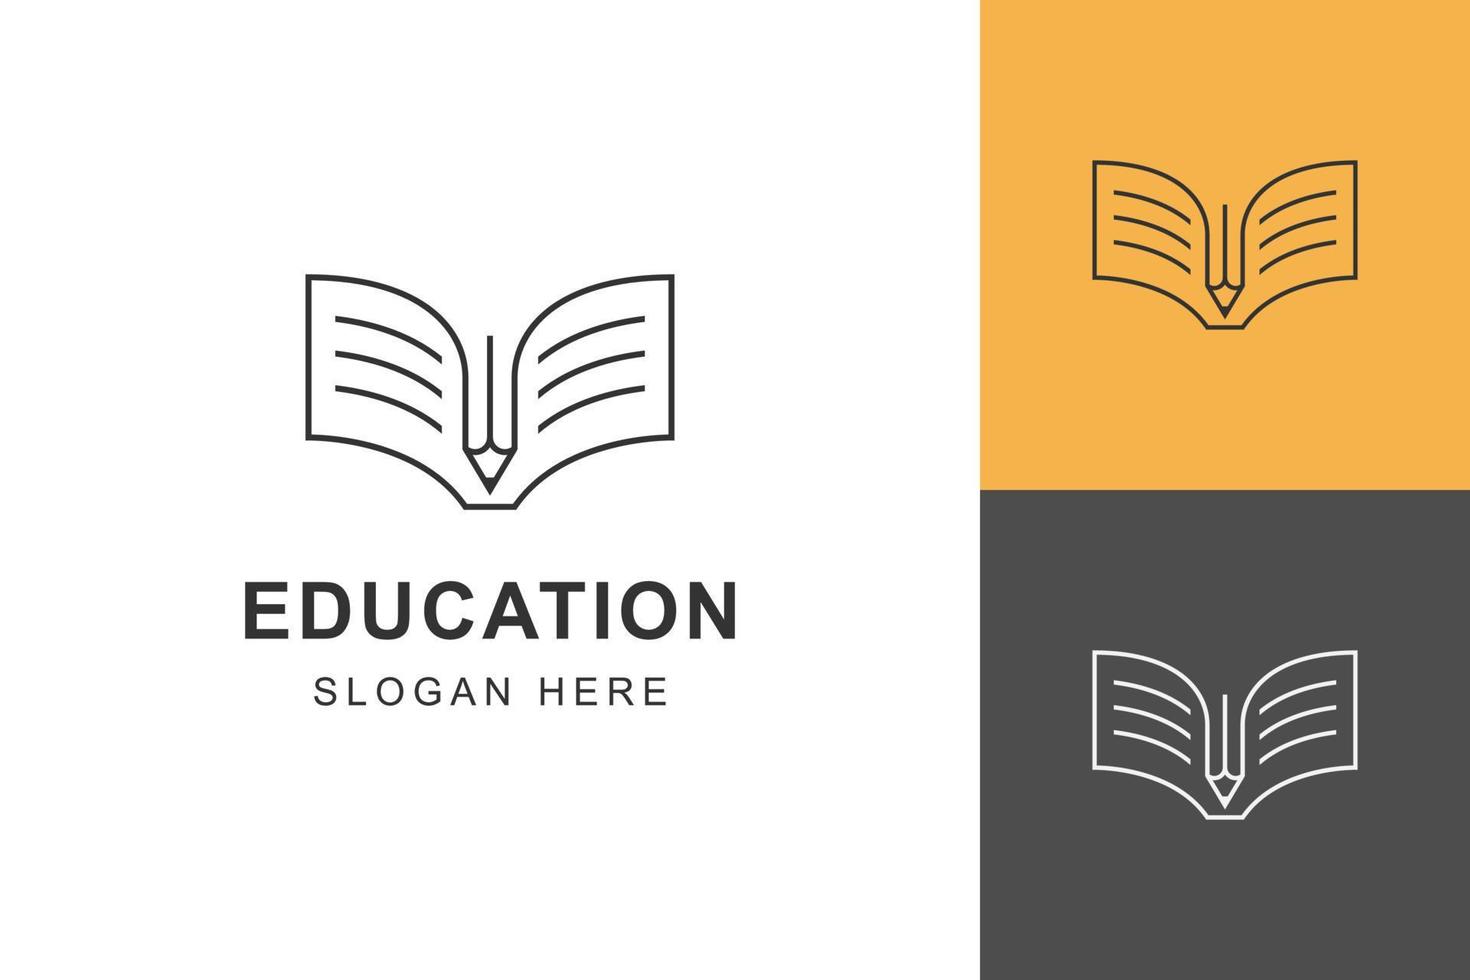 book and pencil logo design line style vector element symbol icon design for education school, sketch book logo design